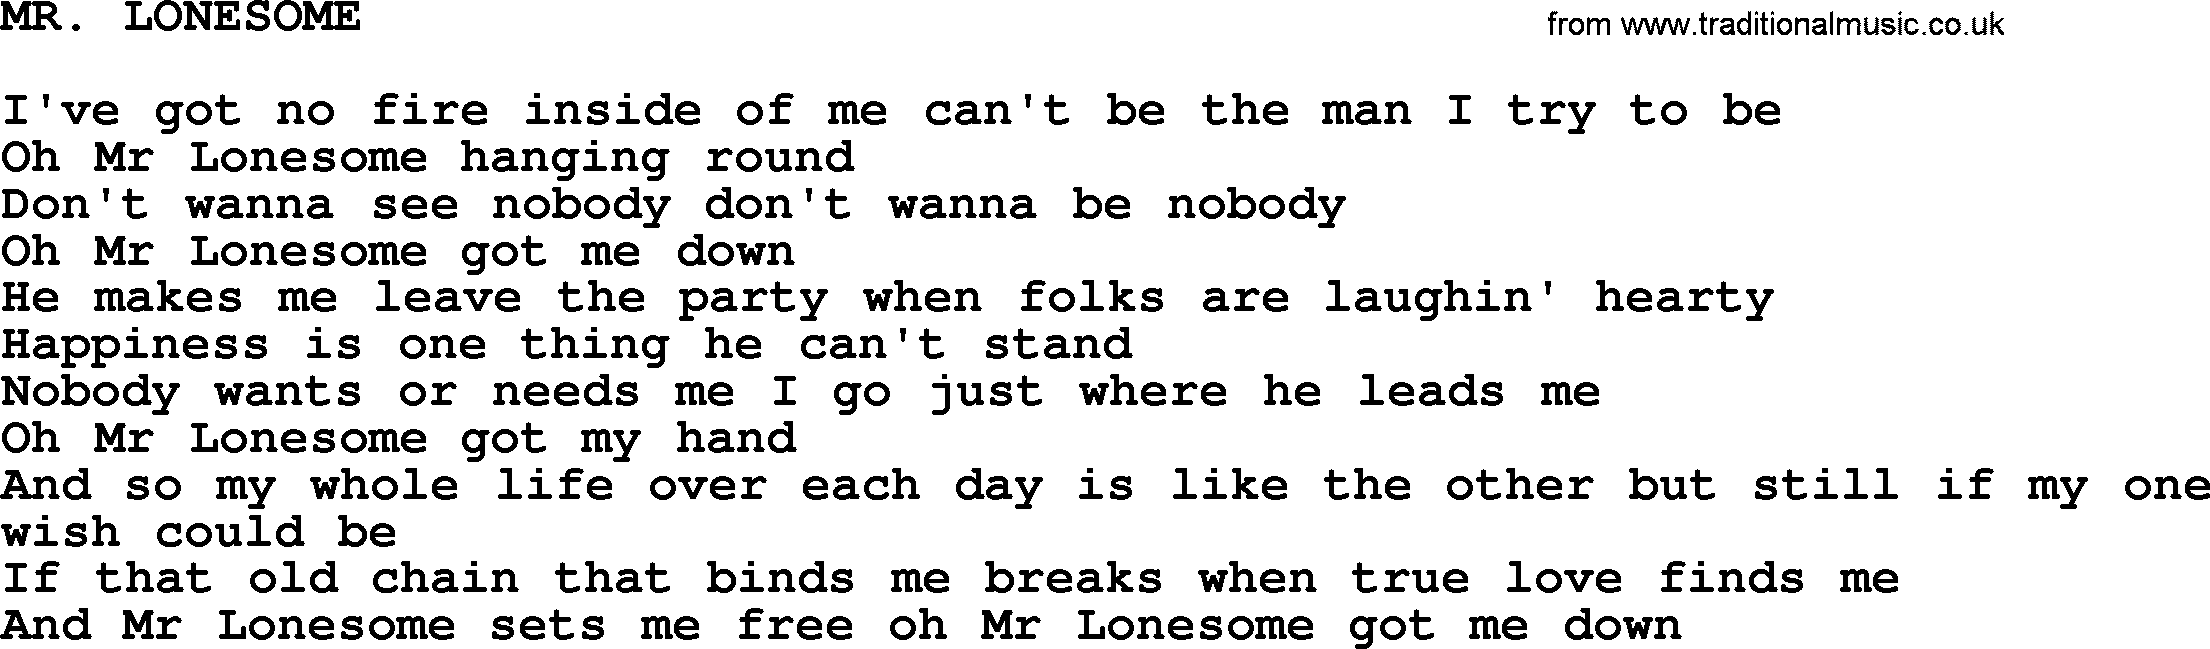 Johnny Cash song Mr. Lonesome.txt lyrics